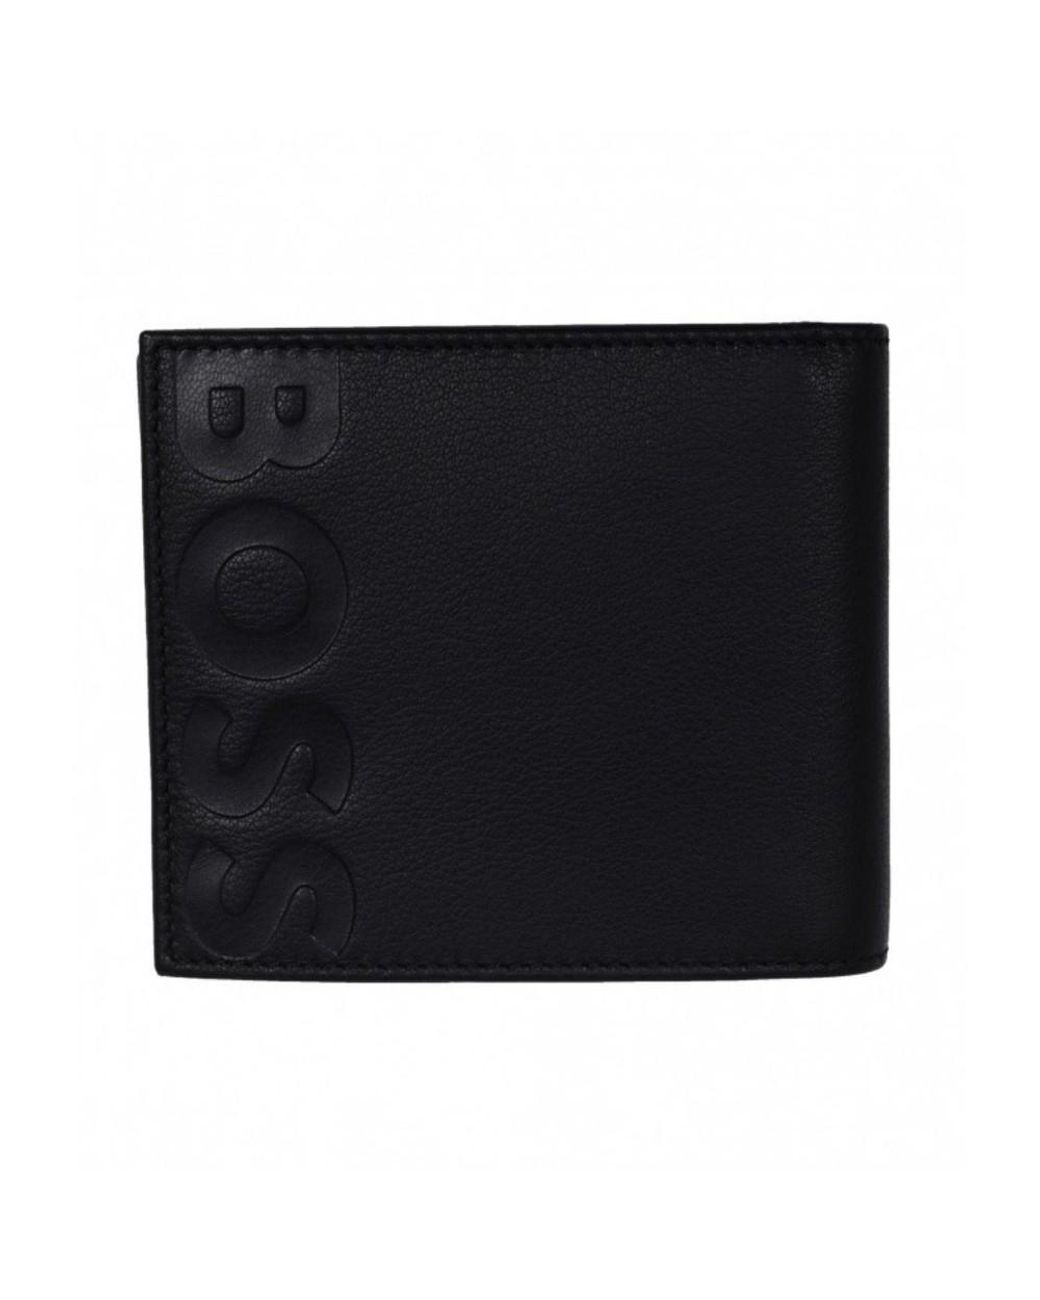 BOSS by HUGO BOSS Leather Big Bb_8 Wallet in Black for Men | Lyst